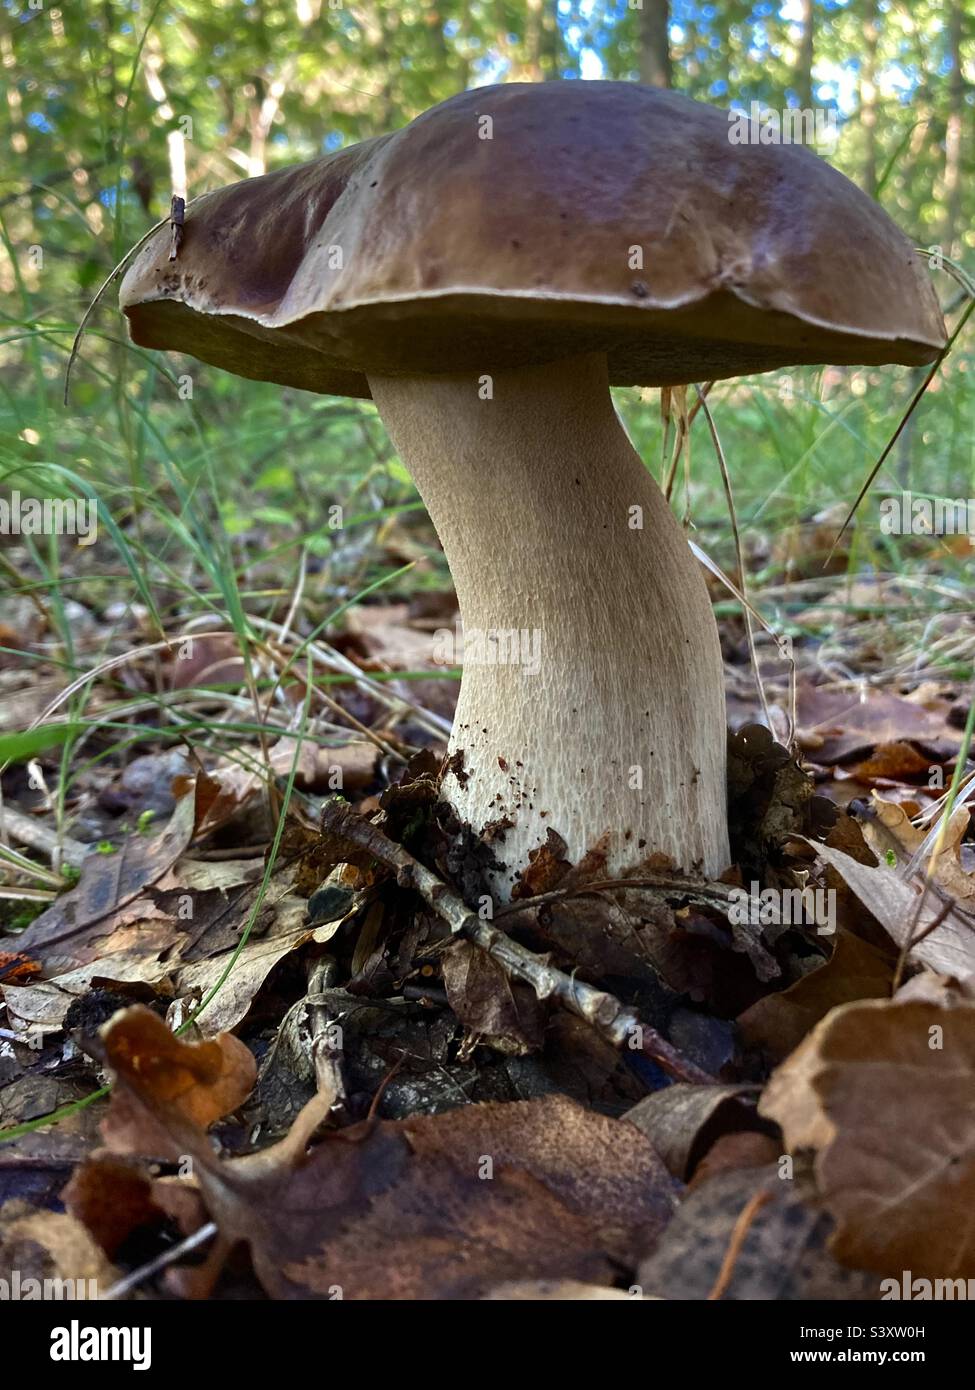 Porcini mushroom Stock Photo